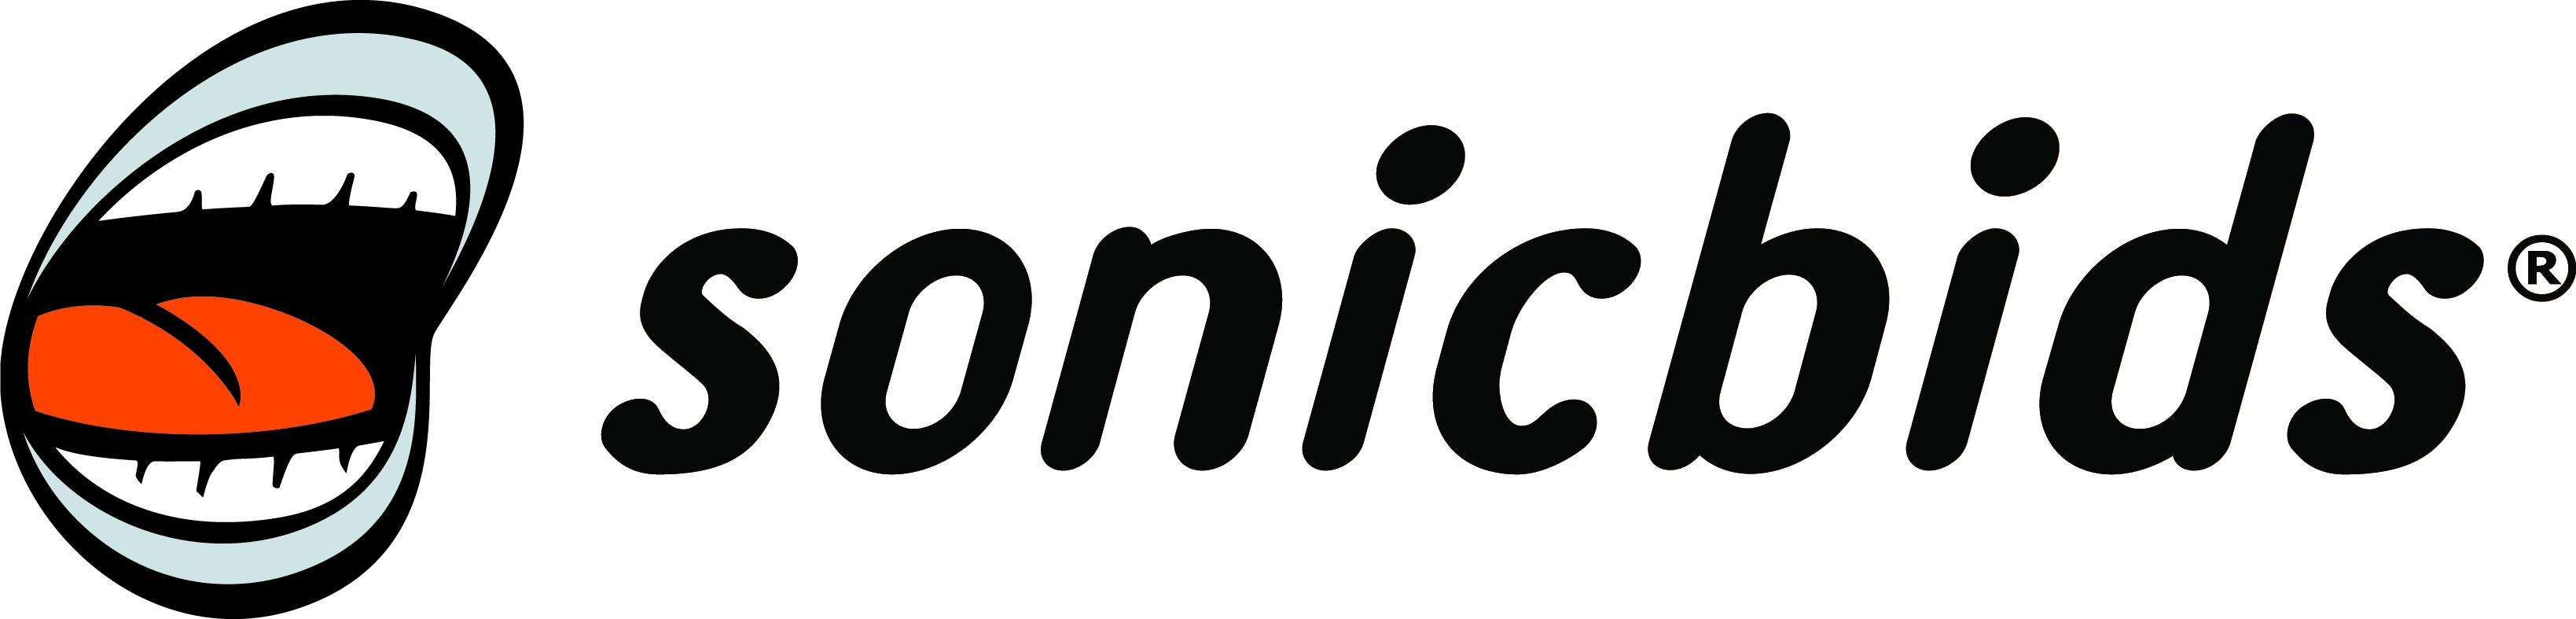 logo-sonicbids-horizontal-lockup.jpg